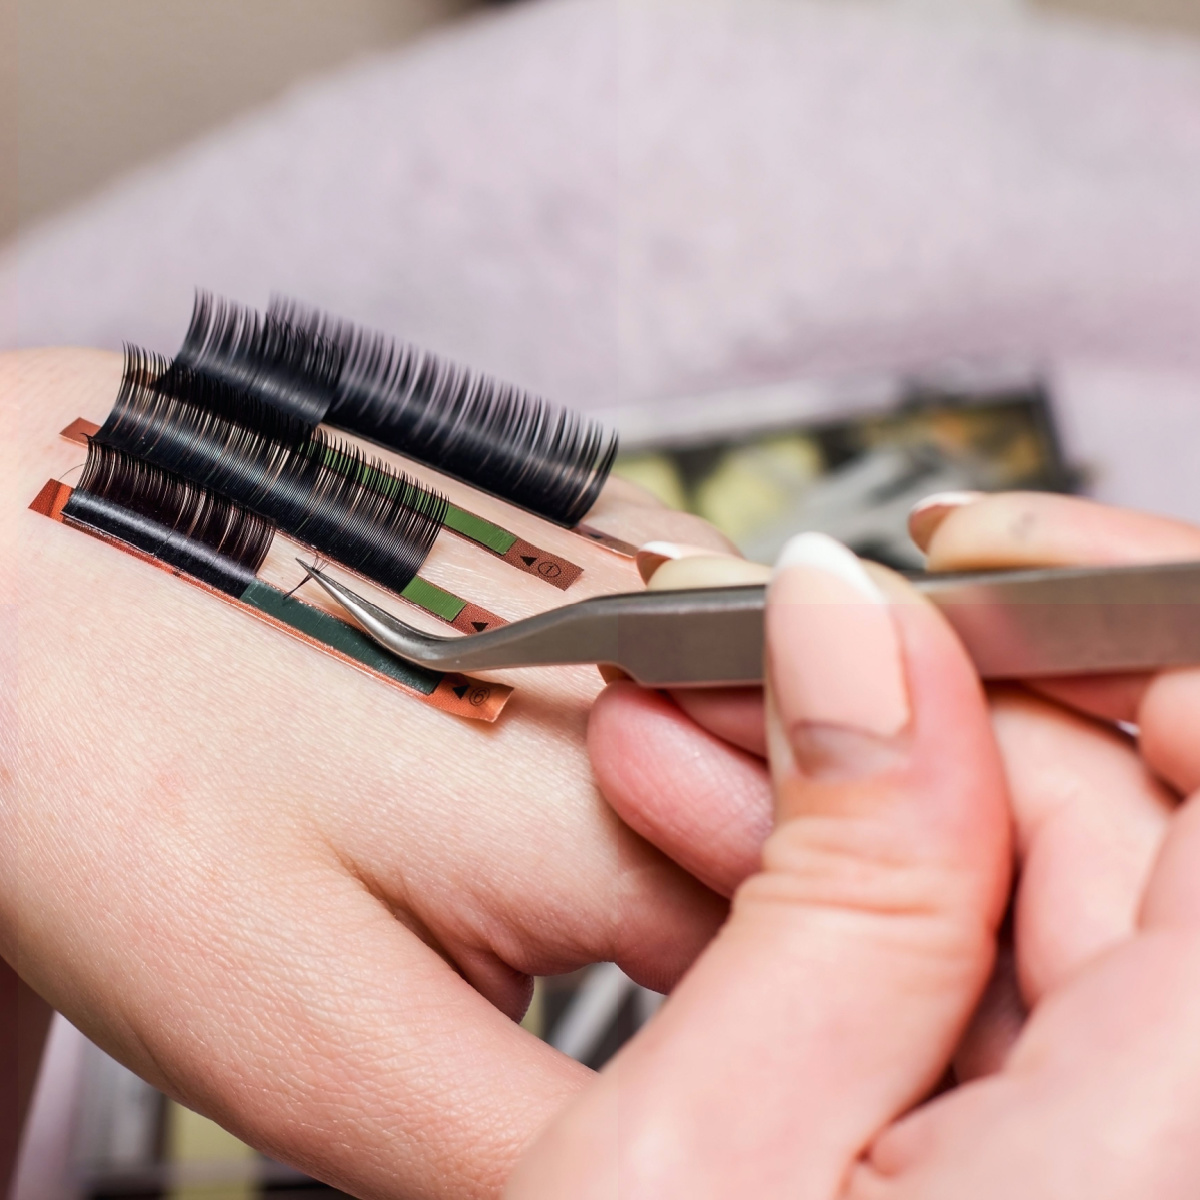 eyelash extenstions expert hand beauty salon fake eyelashes growth glue-on beauty cosmetic product